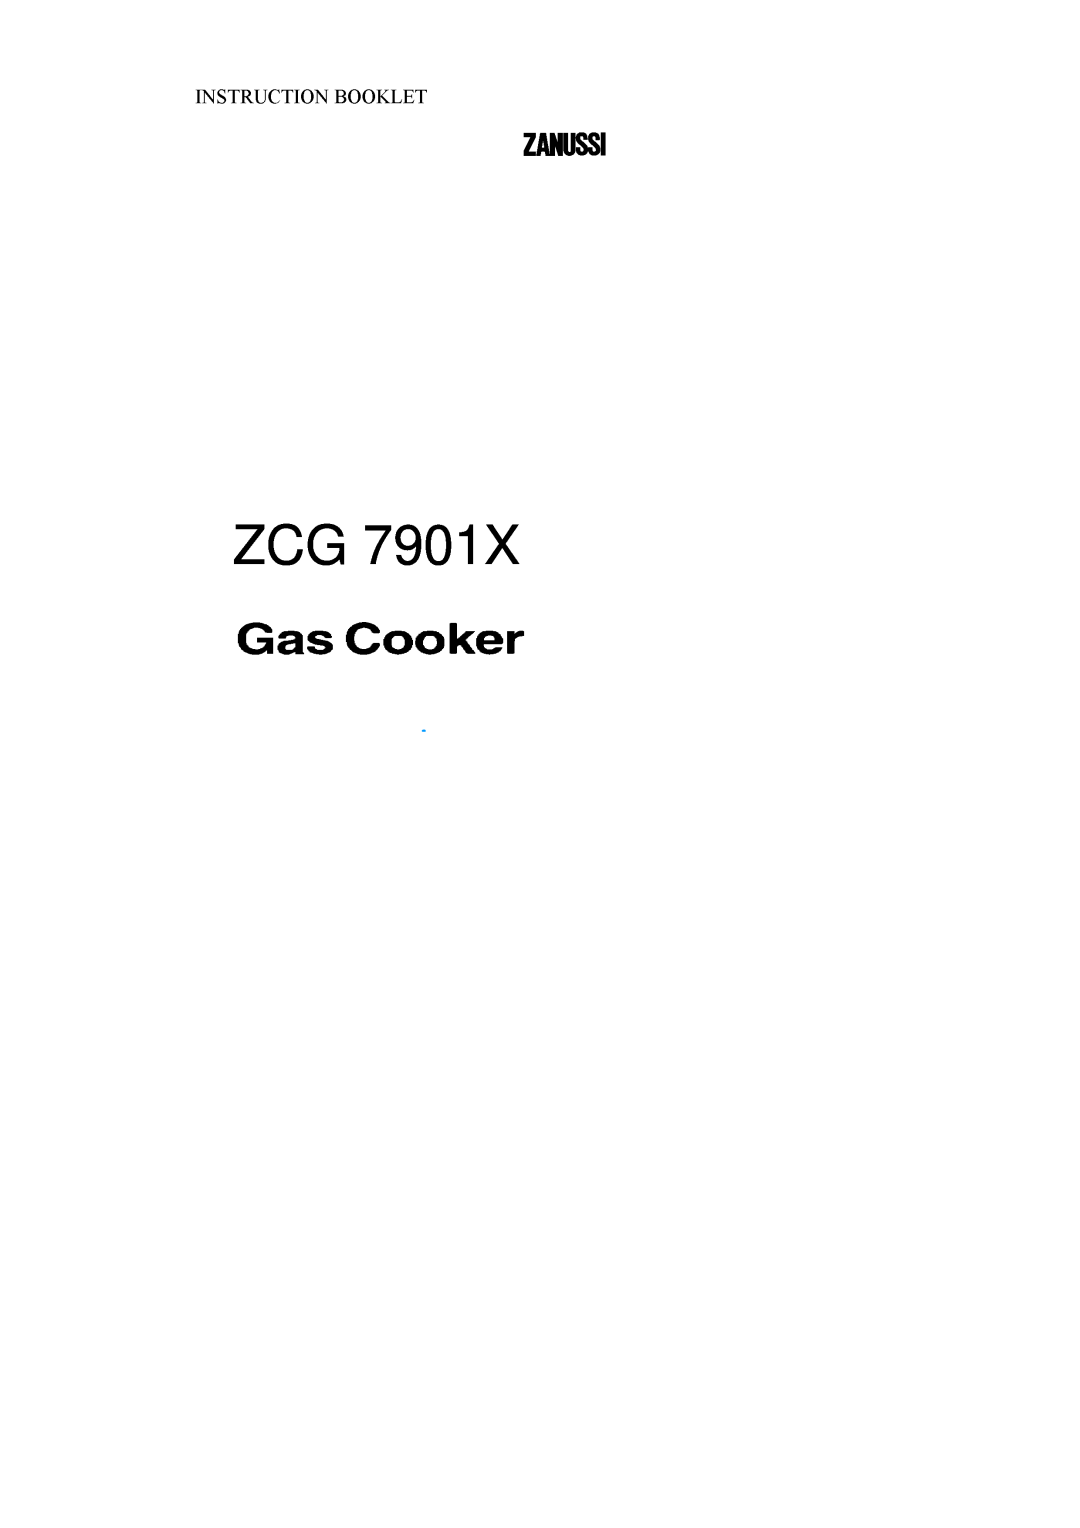 Zanussi ZCG 7901X manual Instructionbooklet 